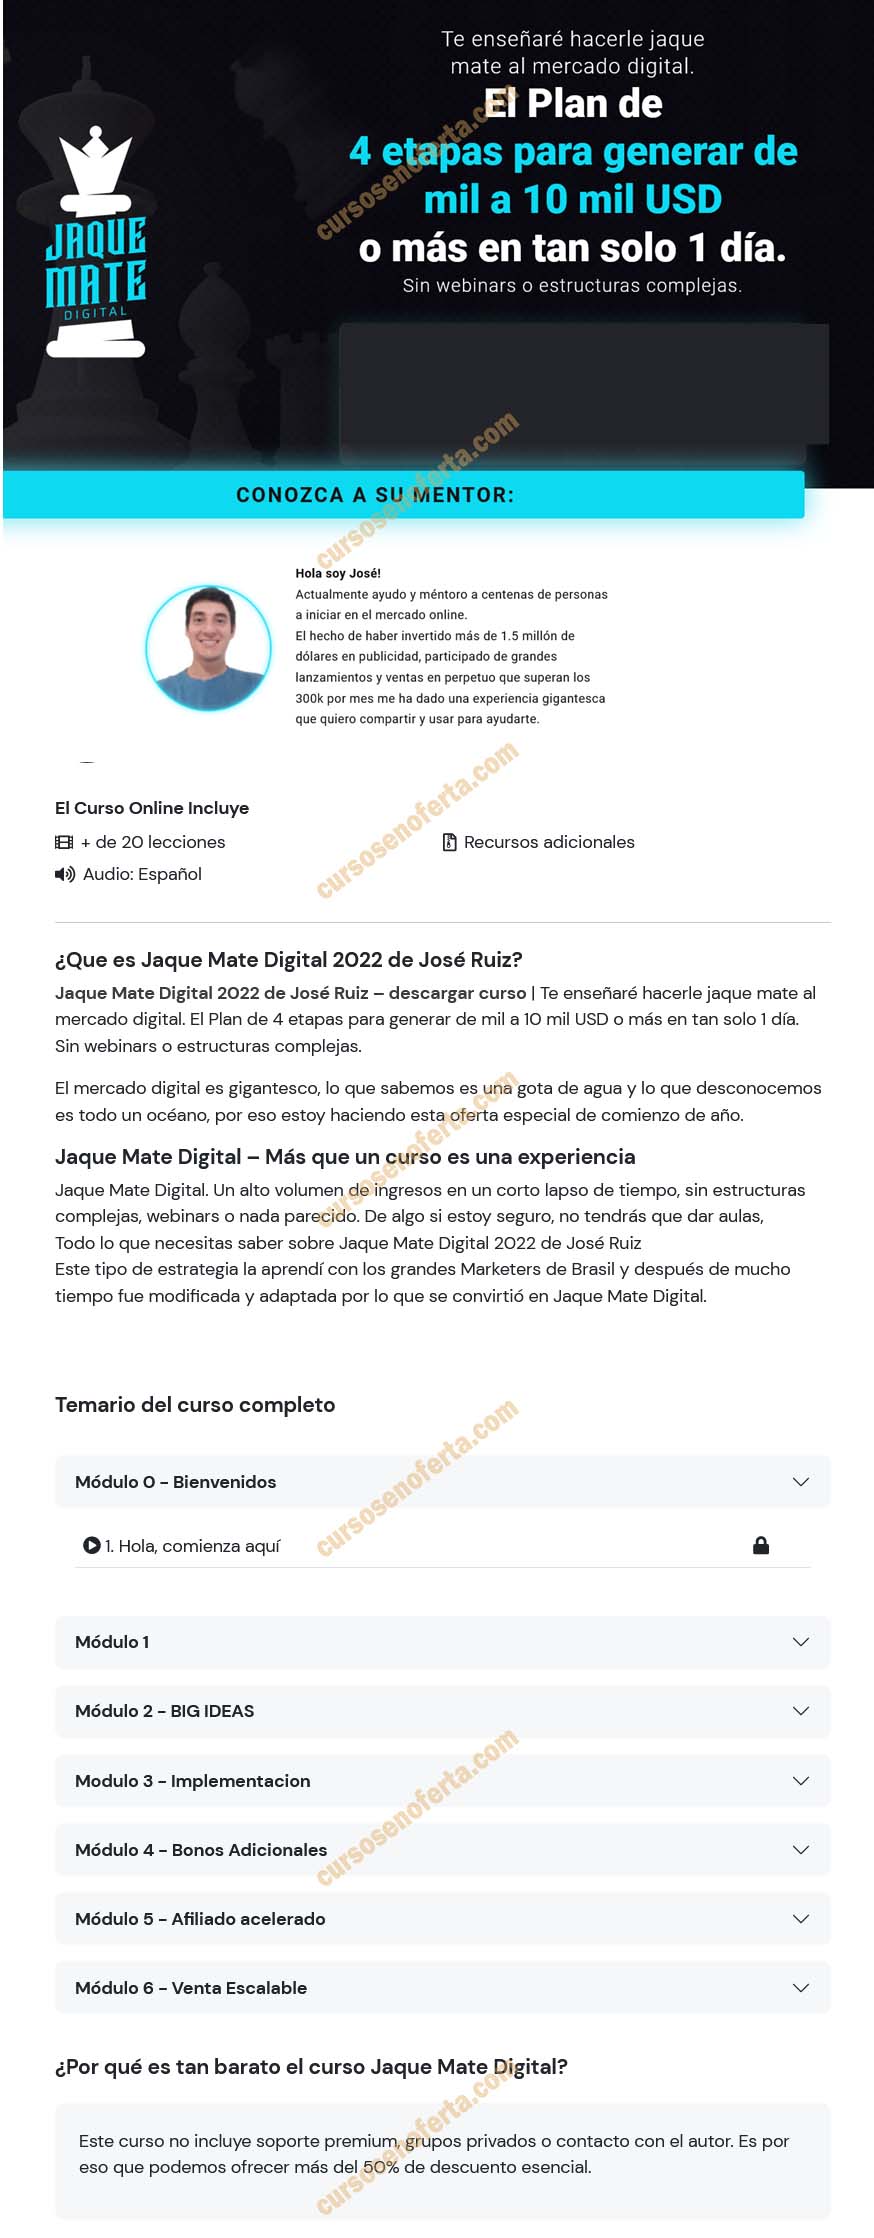 Jaque Mate Digital 2022 - jose ruiz